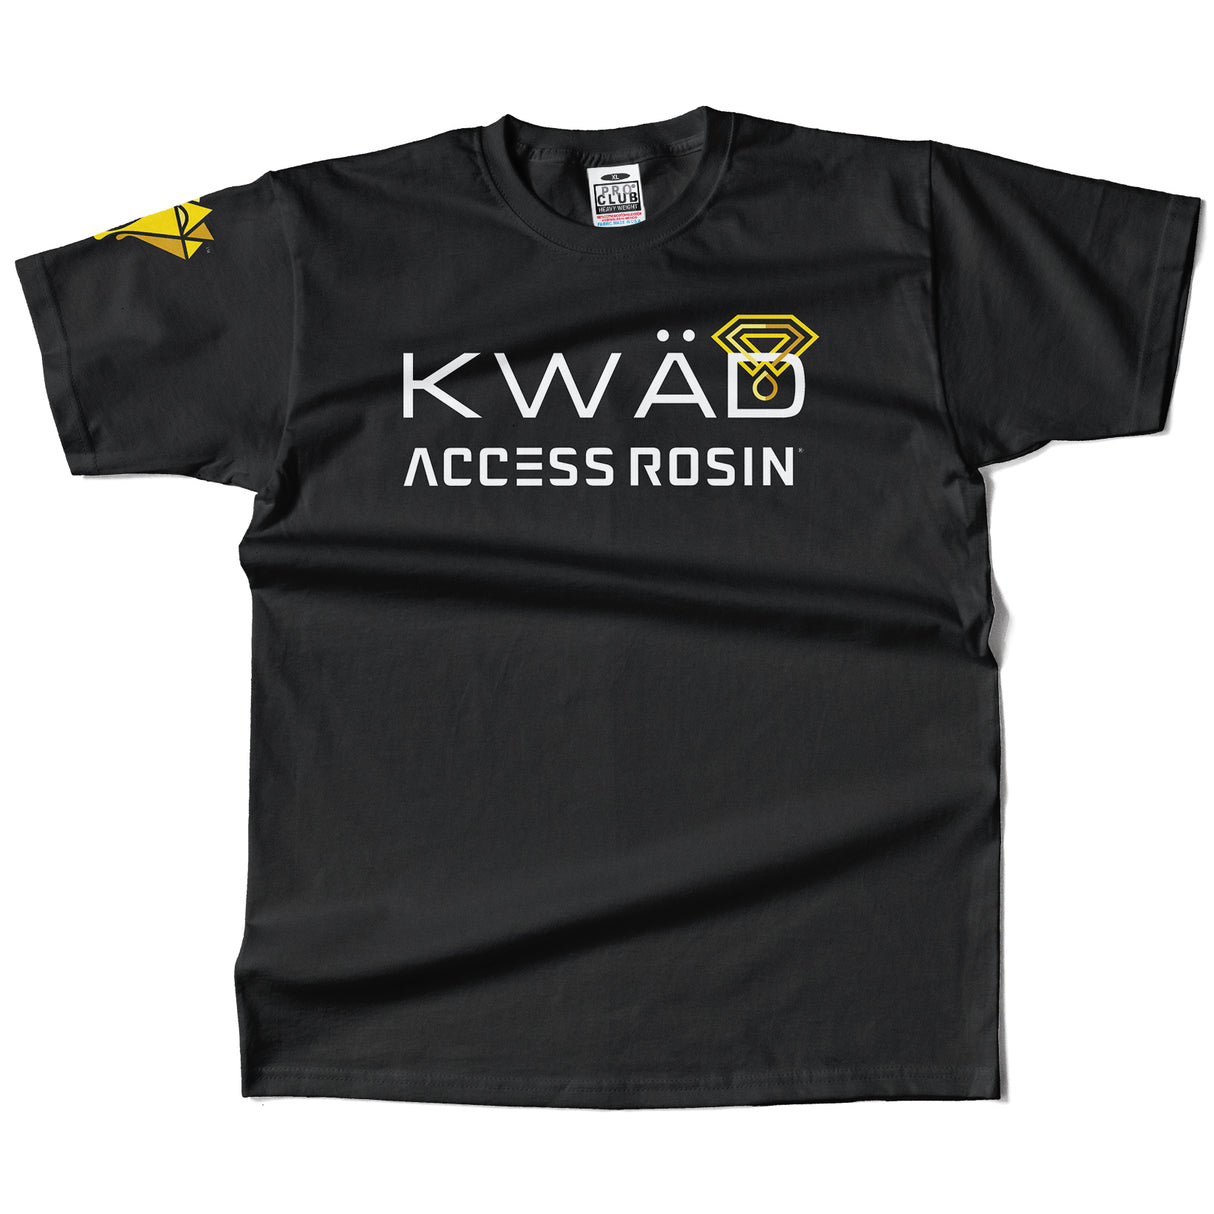 KWAD Logo - Black - Access Rosin